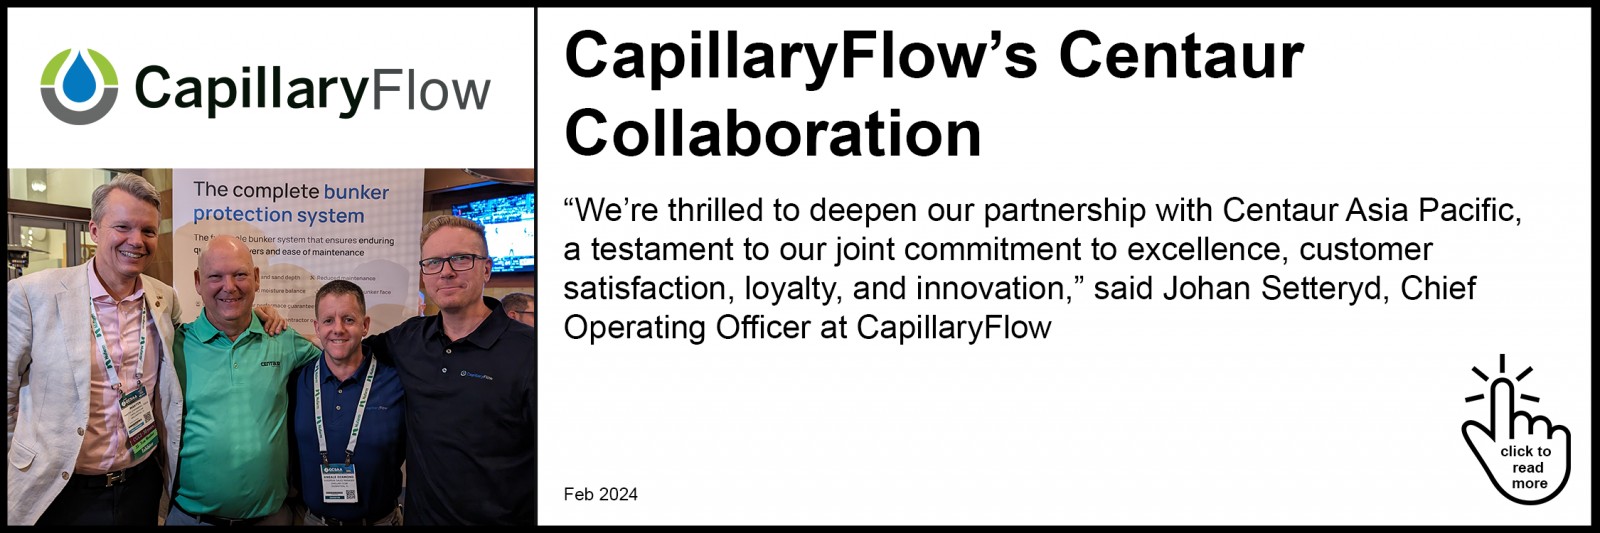 CapillaryFlow’s Centaur Collaboration